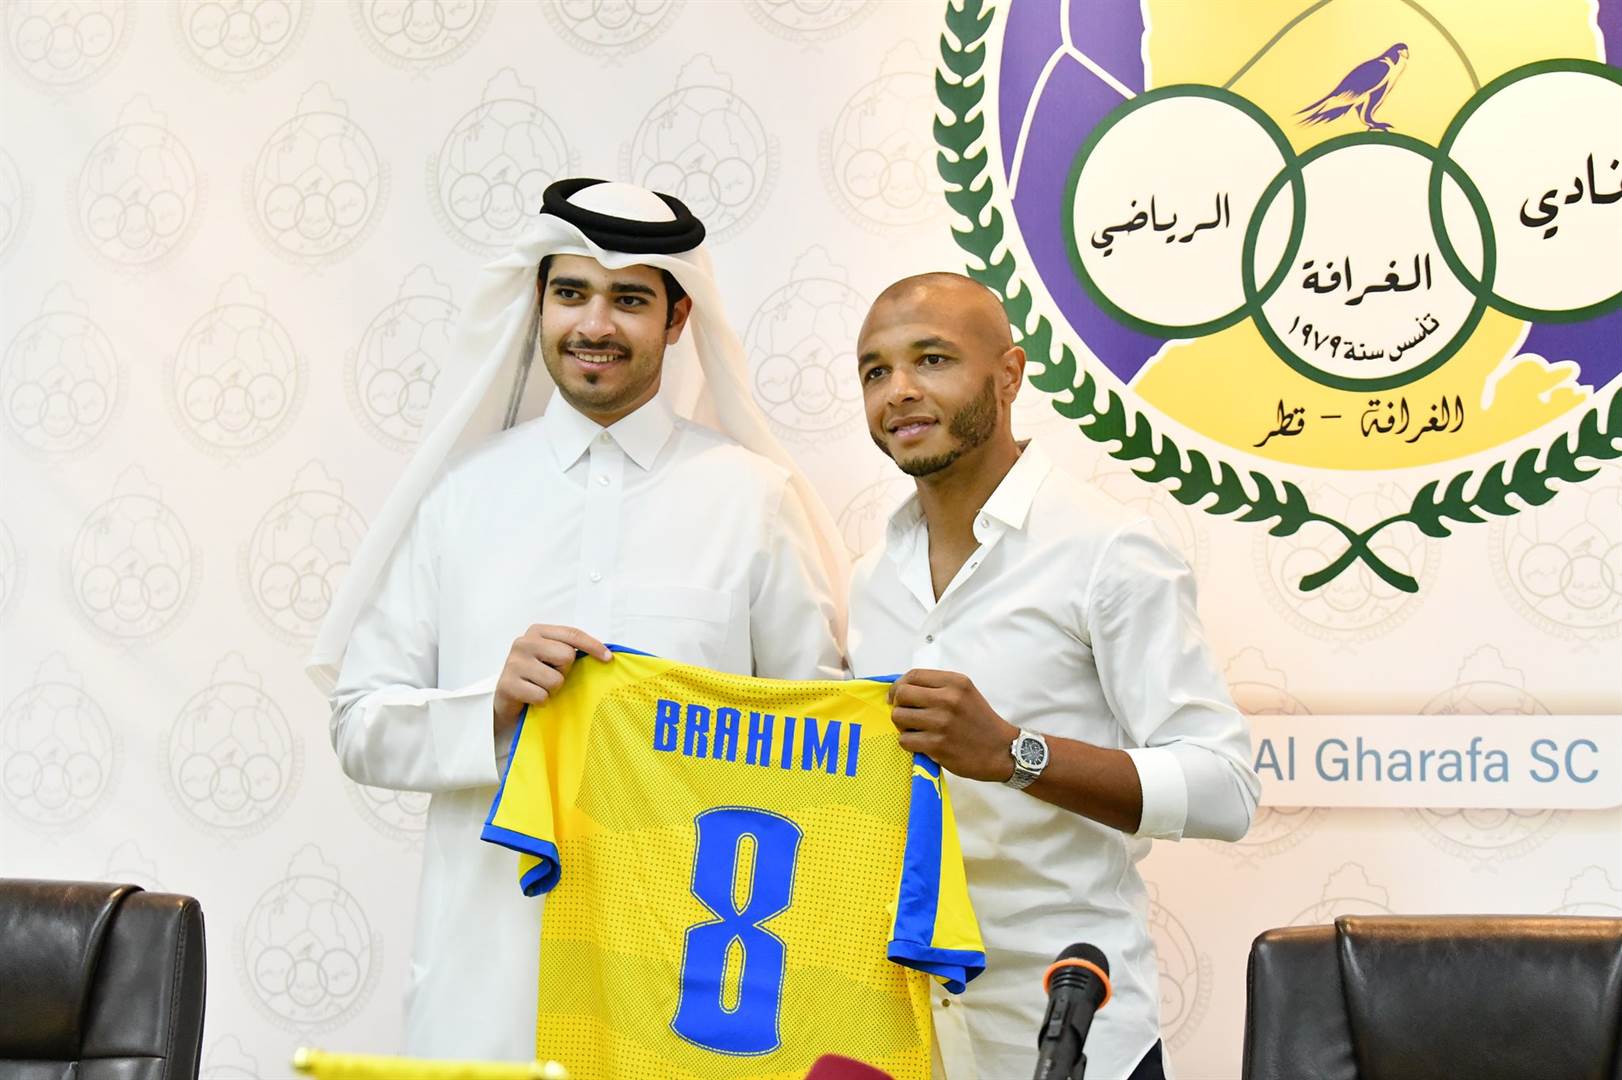 Yacine Brahimi - has joined Al-Gharafa SC as a fre